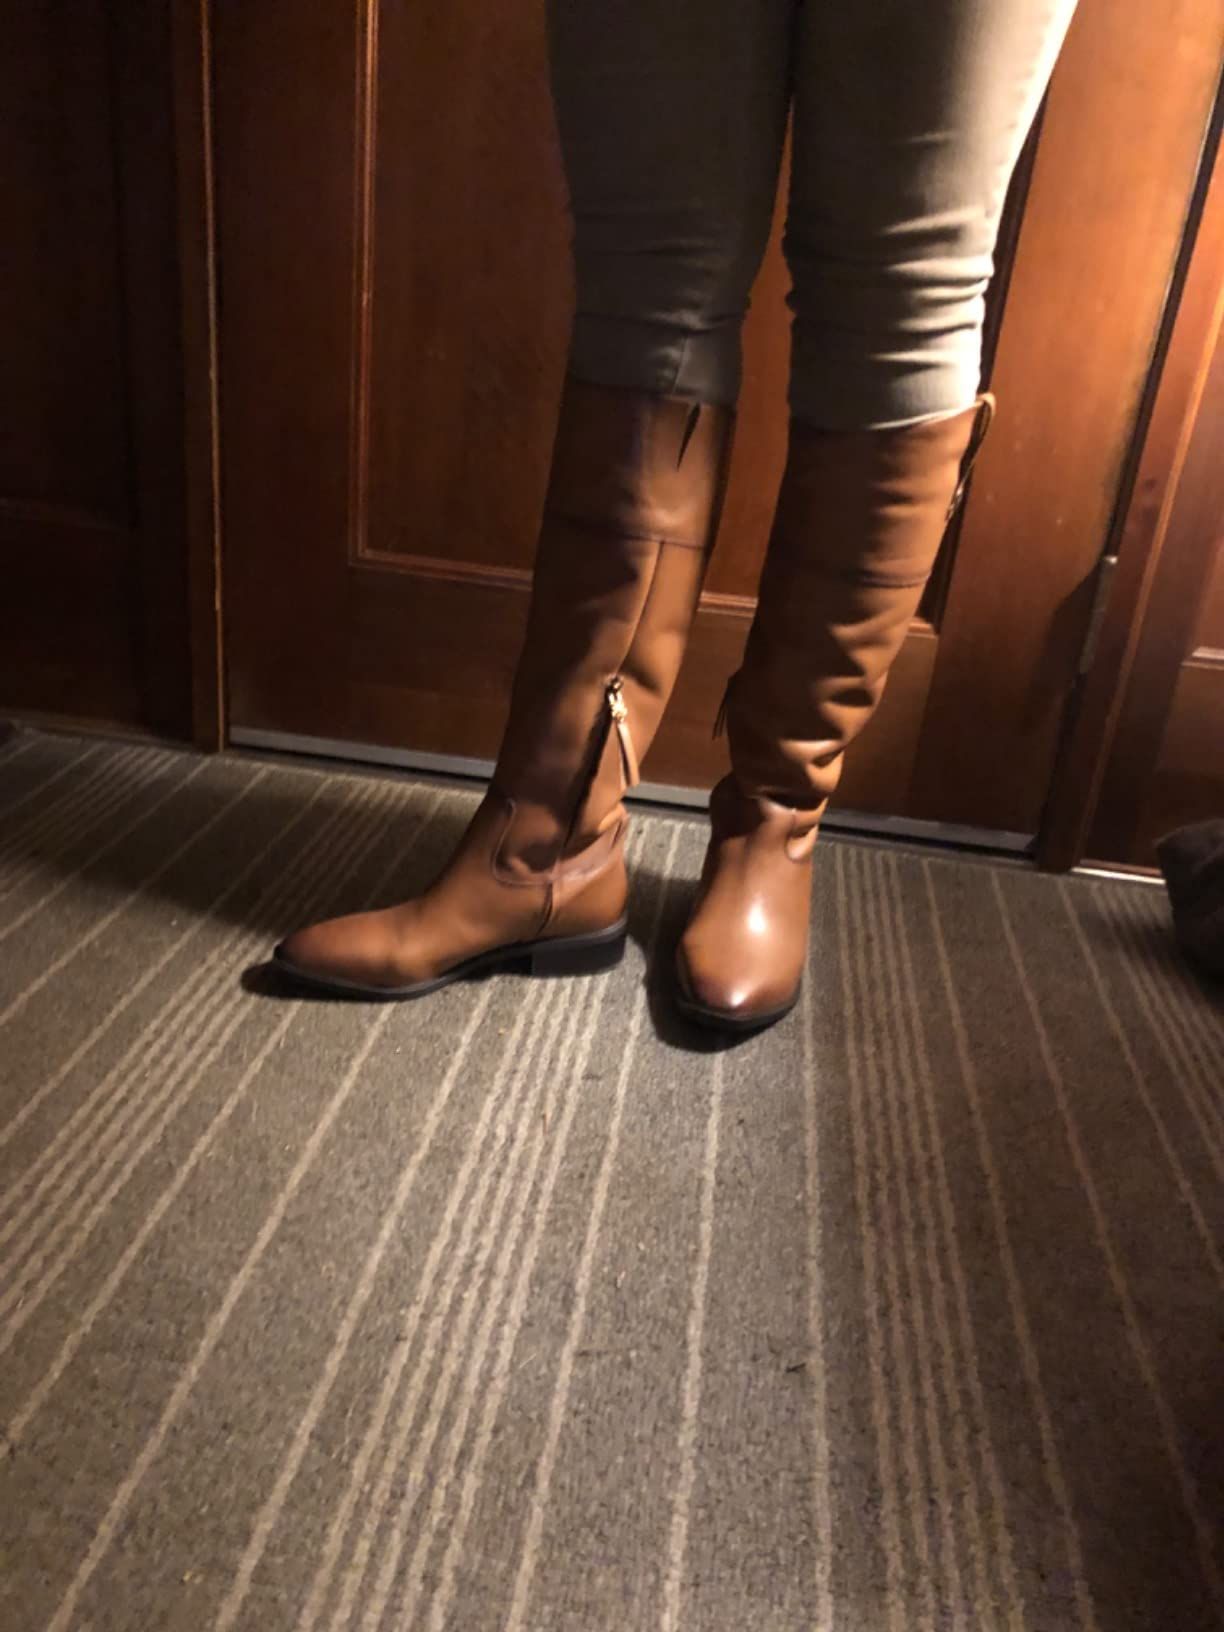 Sam Edelman Women's Drina Knee High Boot | Amazon (US)